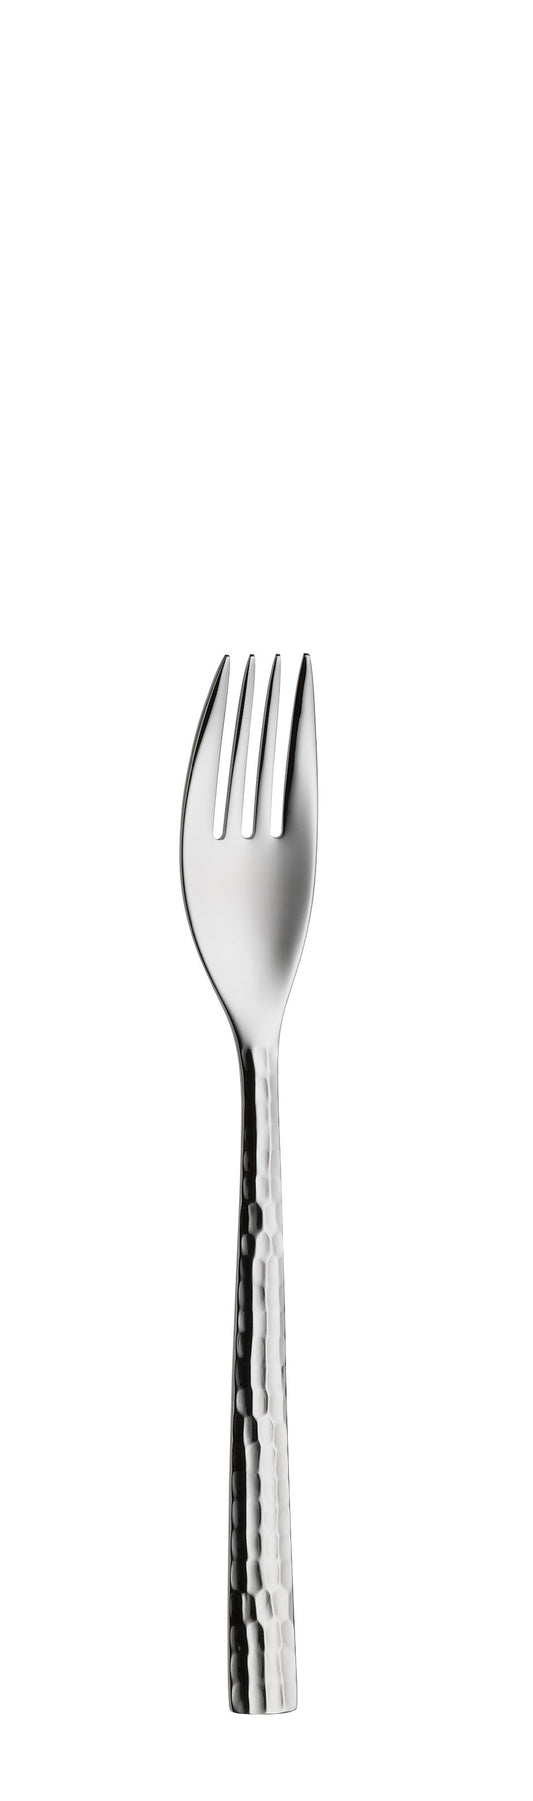 Dessert fork 4 prongs LENISTA silver plated 158mm